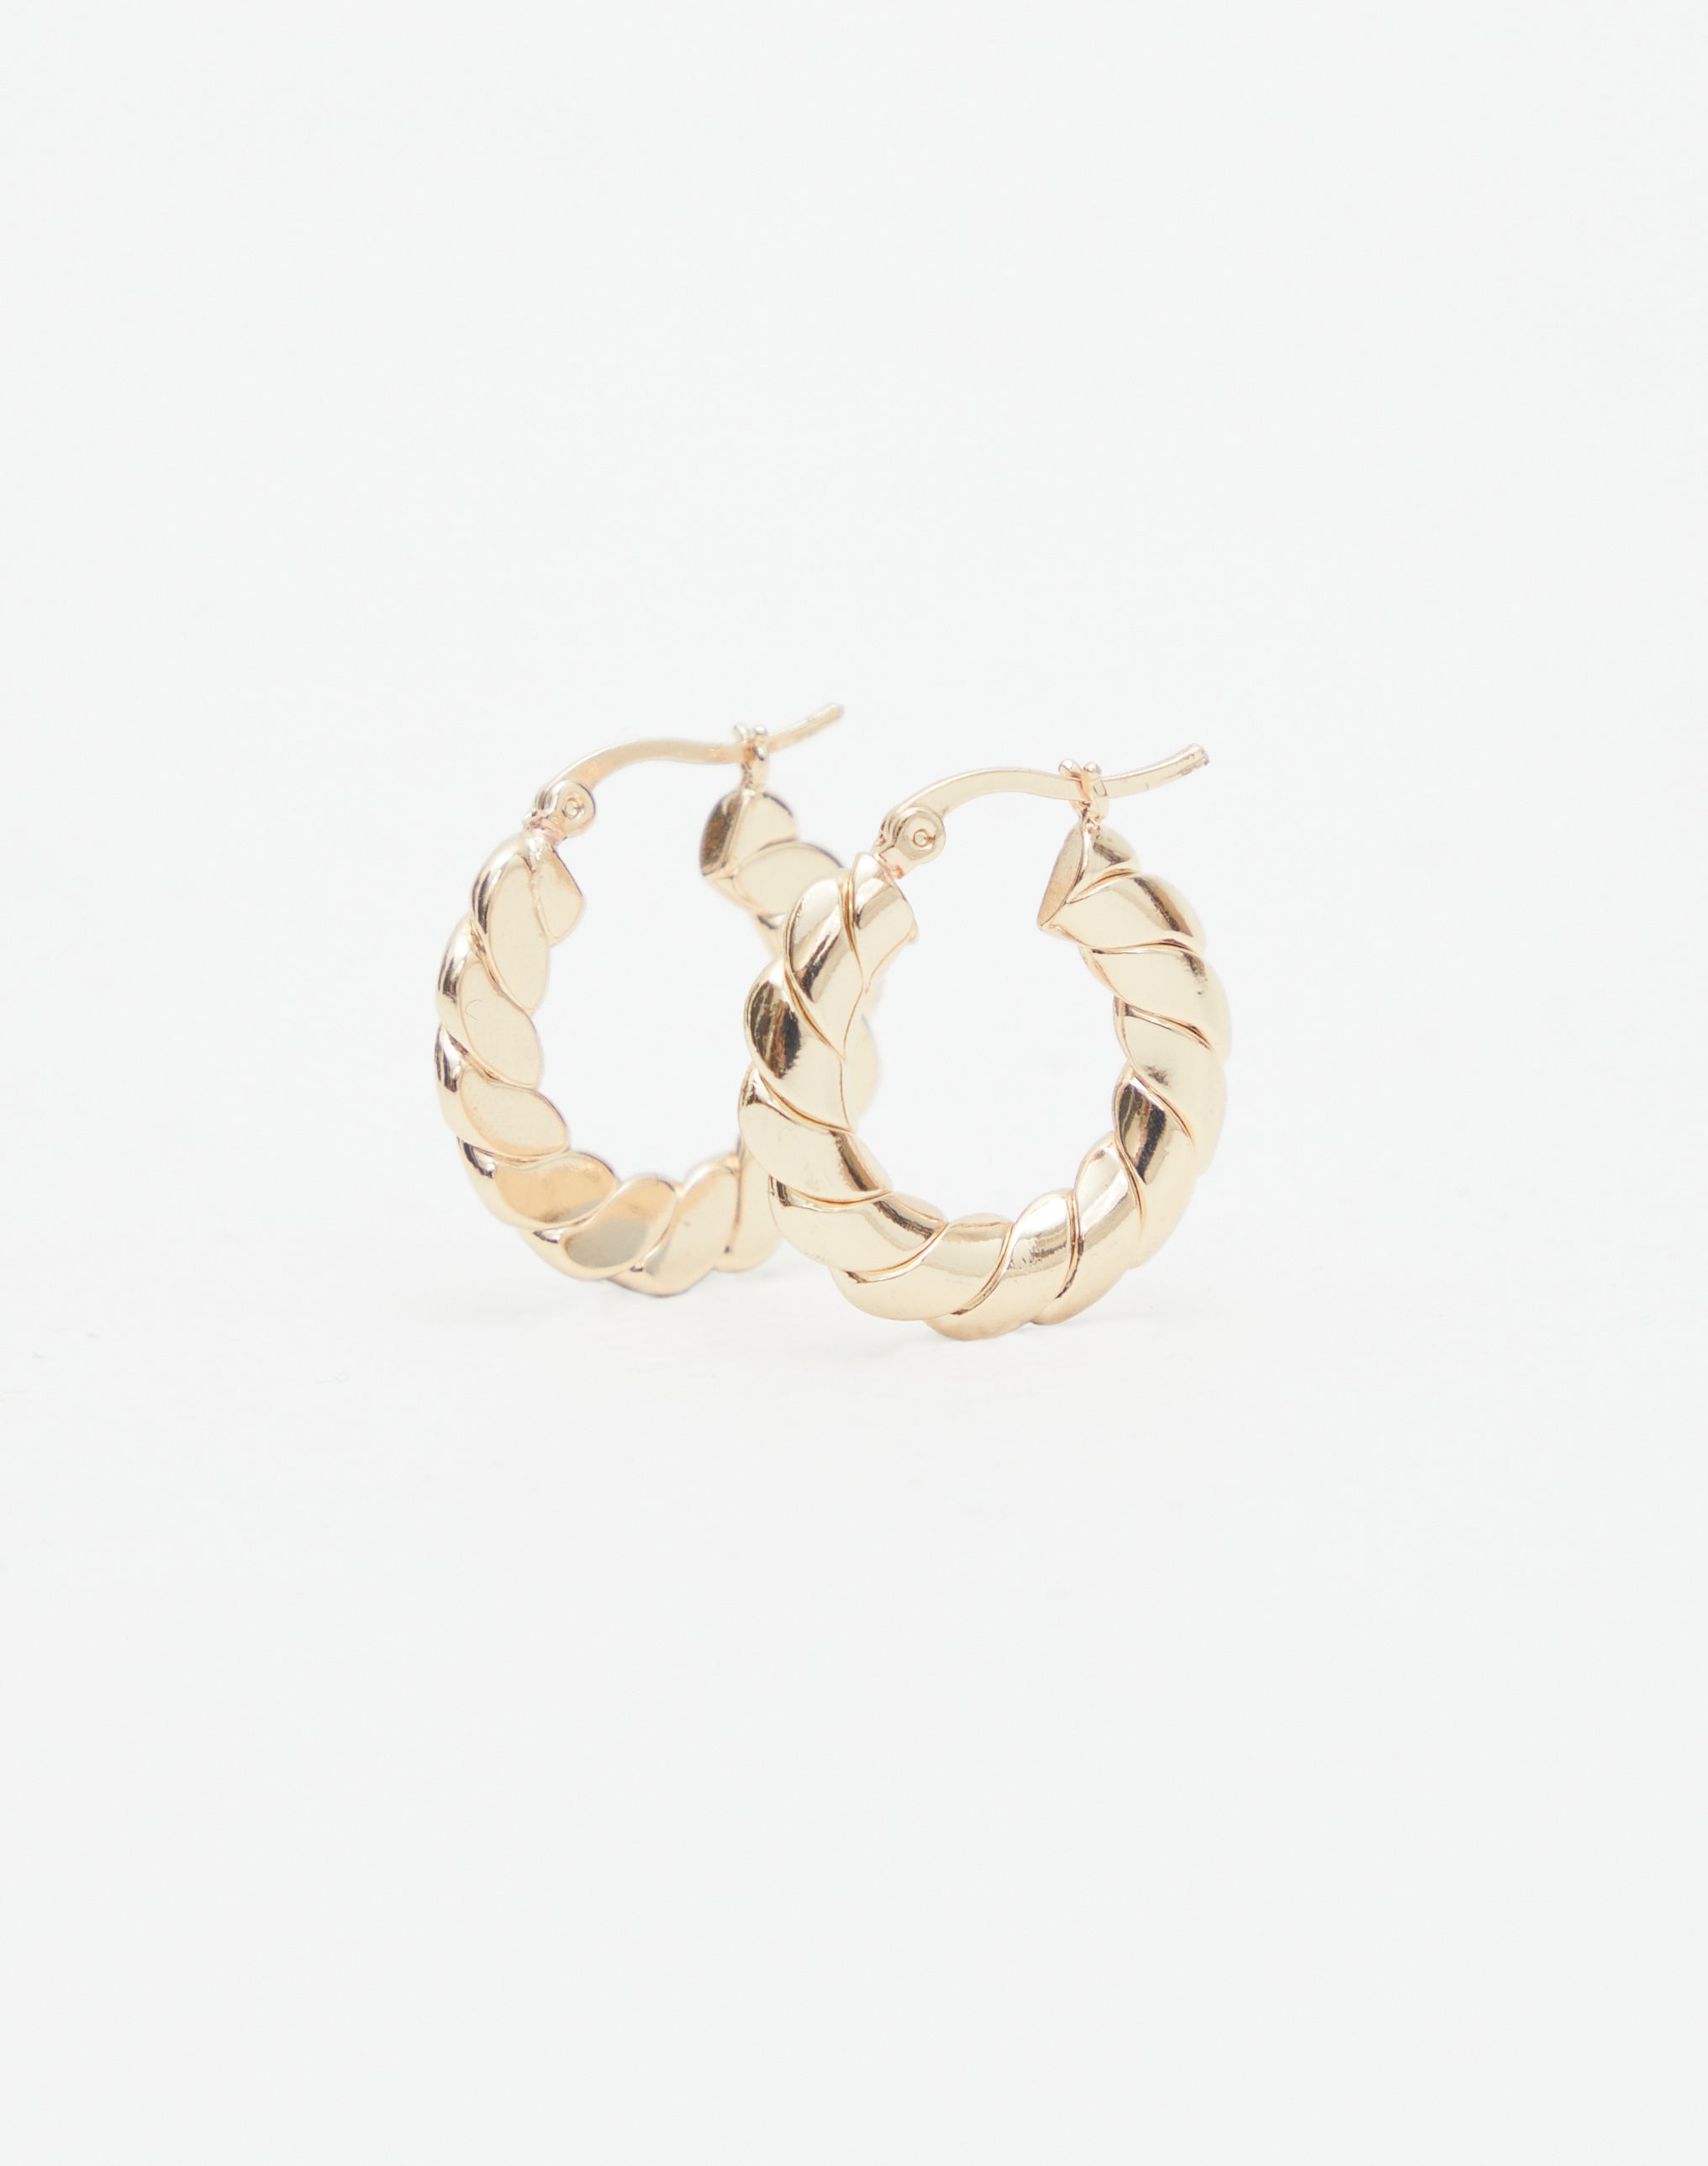 Discover More Than Small K Gold Hoop Earrings Best Tdesign Edu Vn